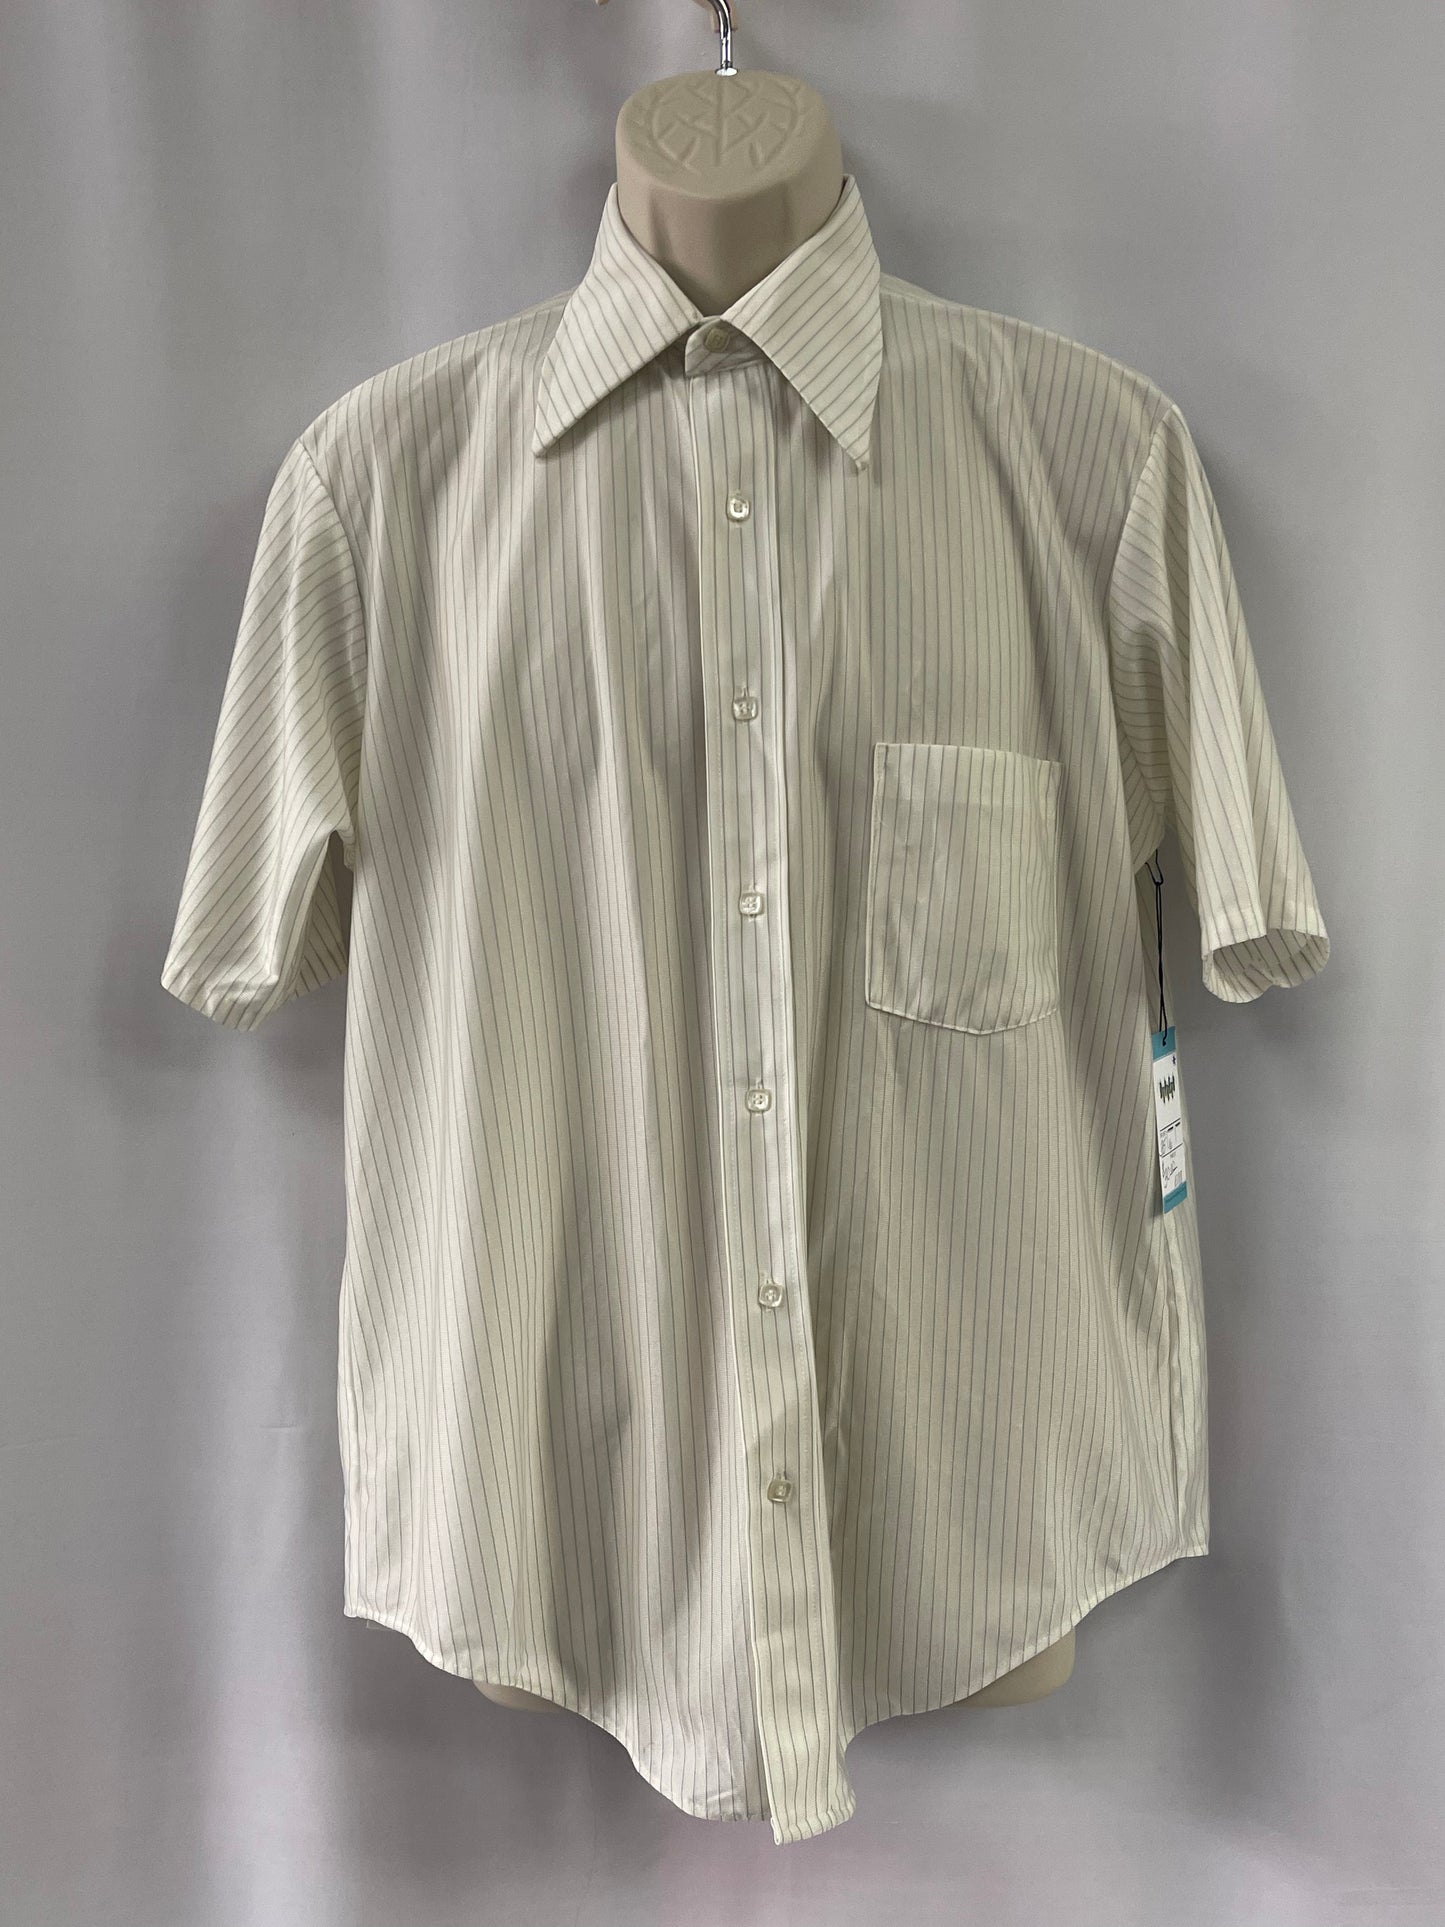 Men’s White Van Heusen Button Up Shirt